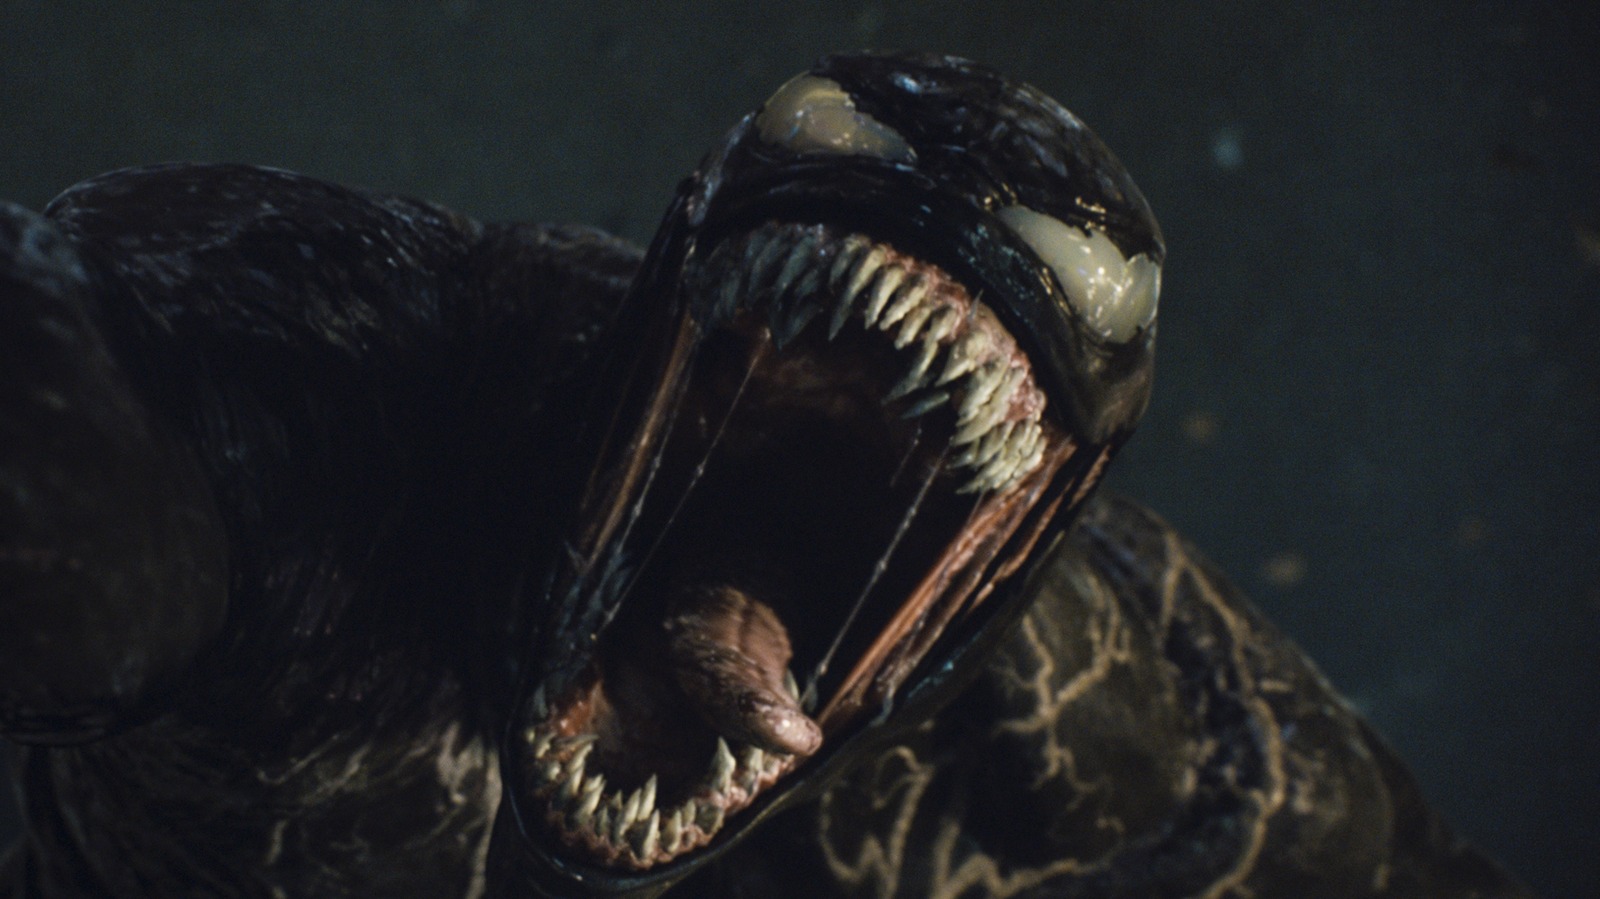 Let carnage be streaming venom there Venom: Let